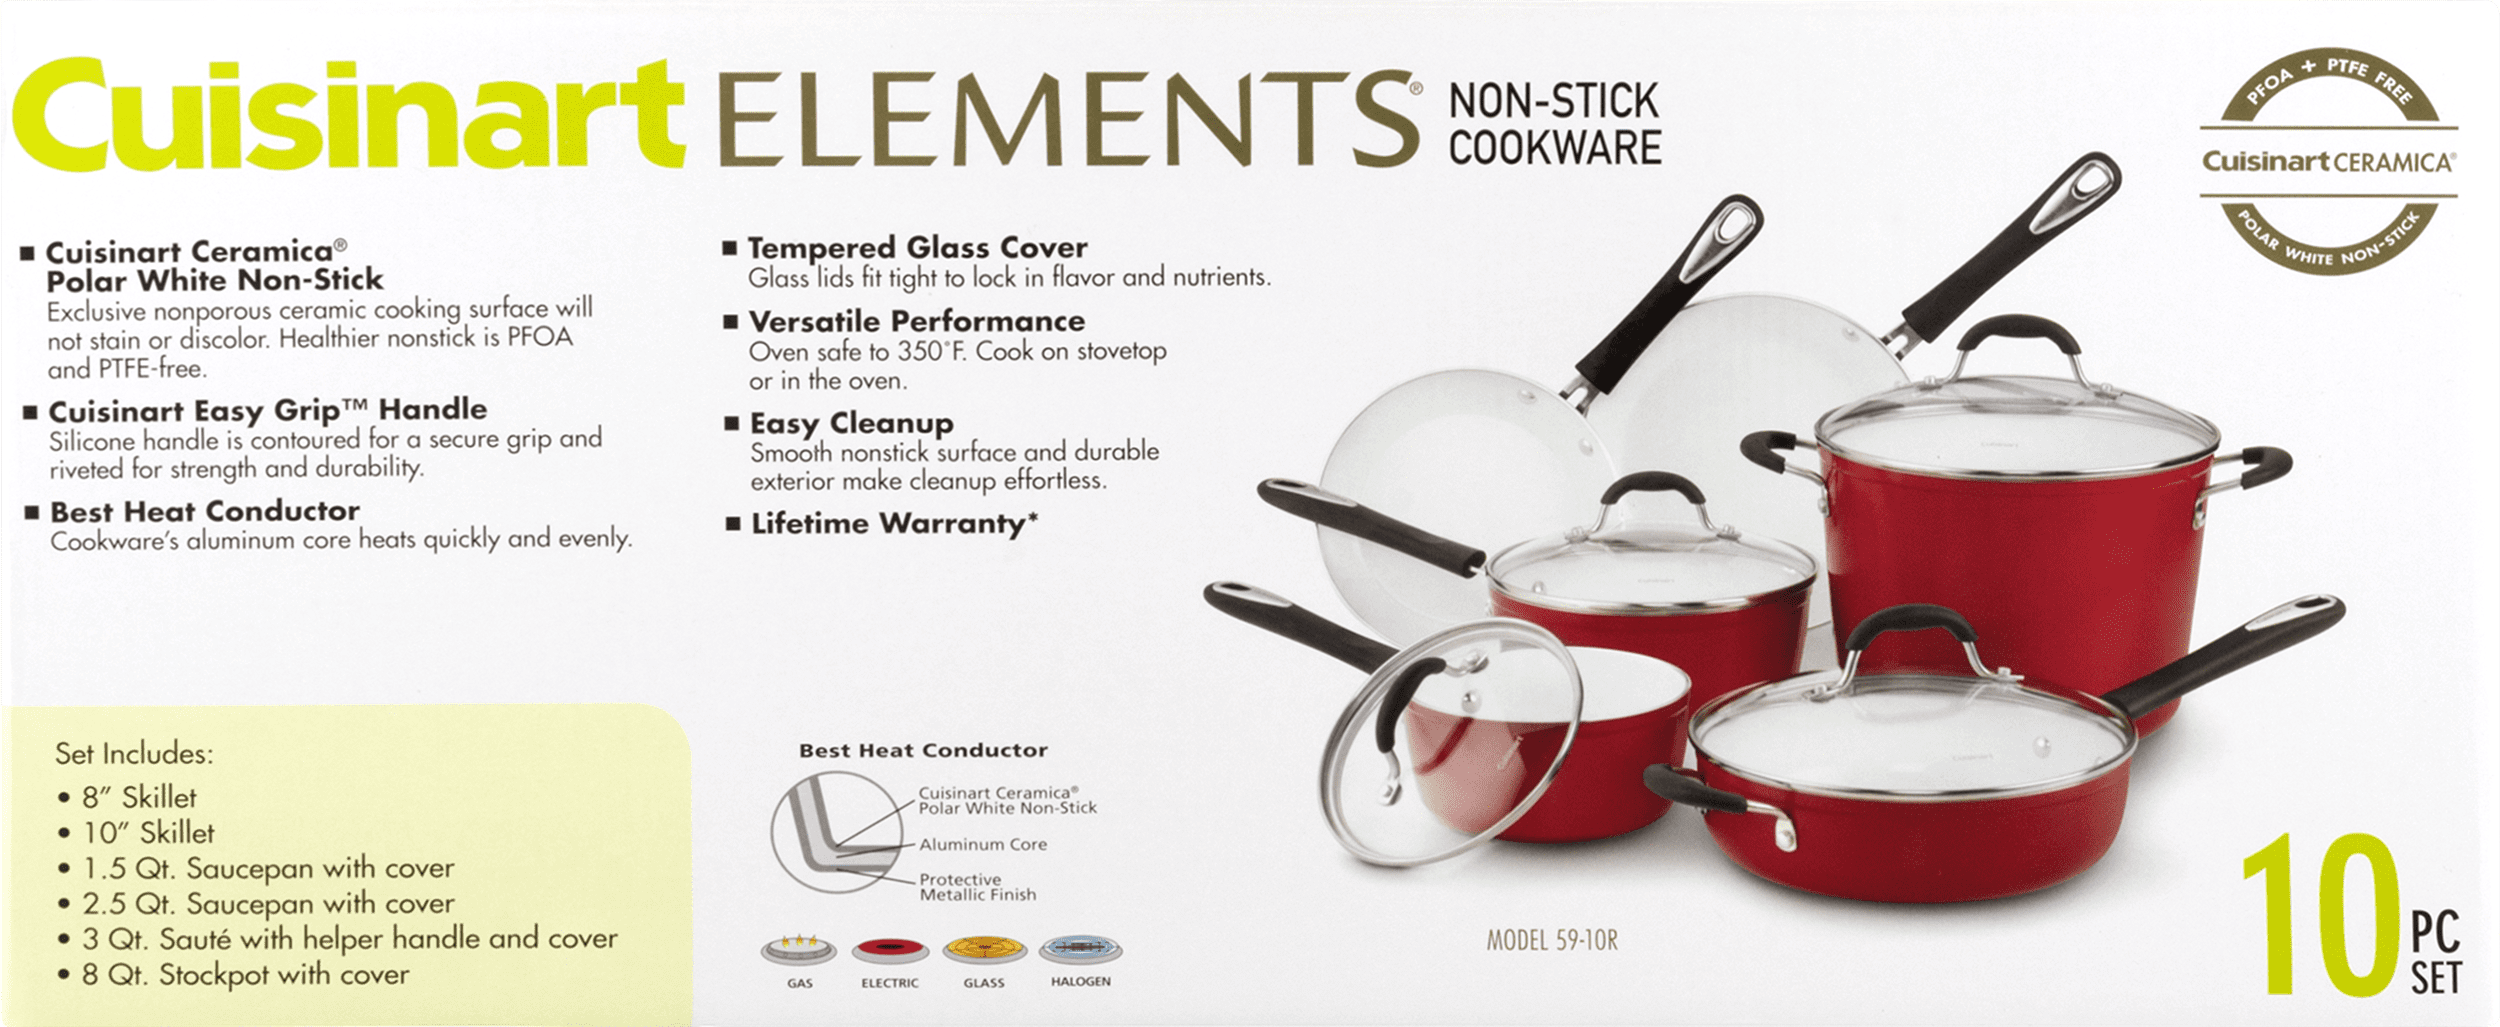 Cuisinart 59-10CH Elements 10-Piece Non-Stick Cookware Set, Champagne - Bed  Bath & Beyond - 23146491